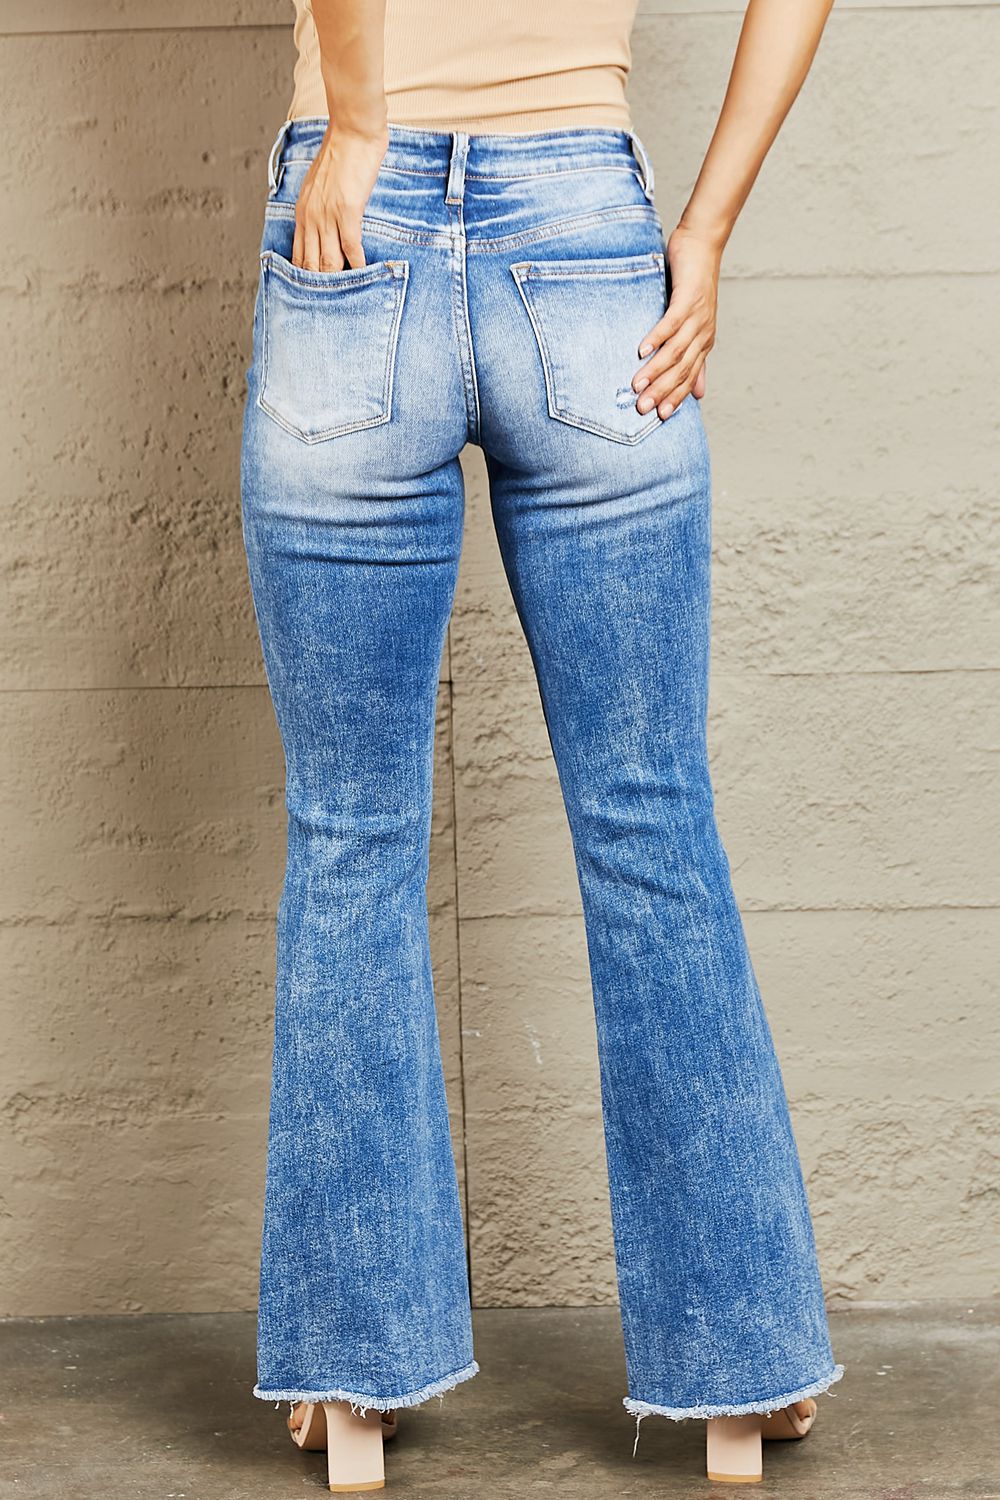 Sydney Mid Rise Bootcut Jeans in Medium Wash